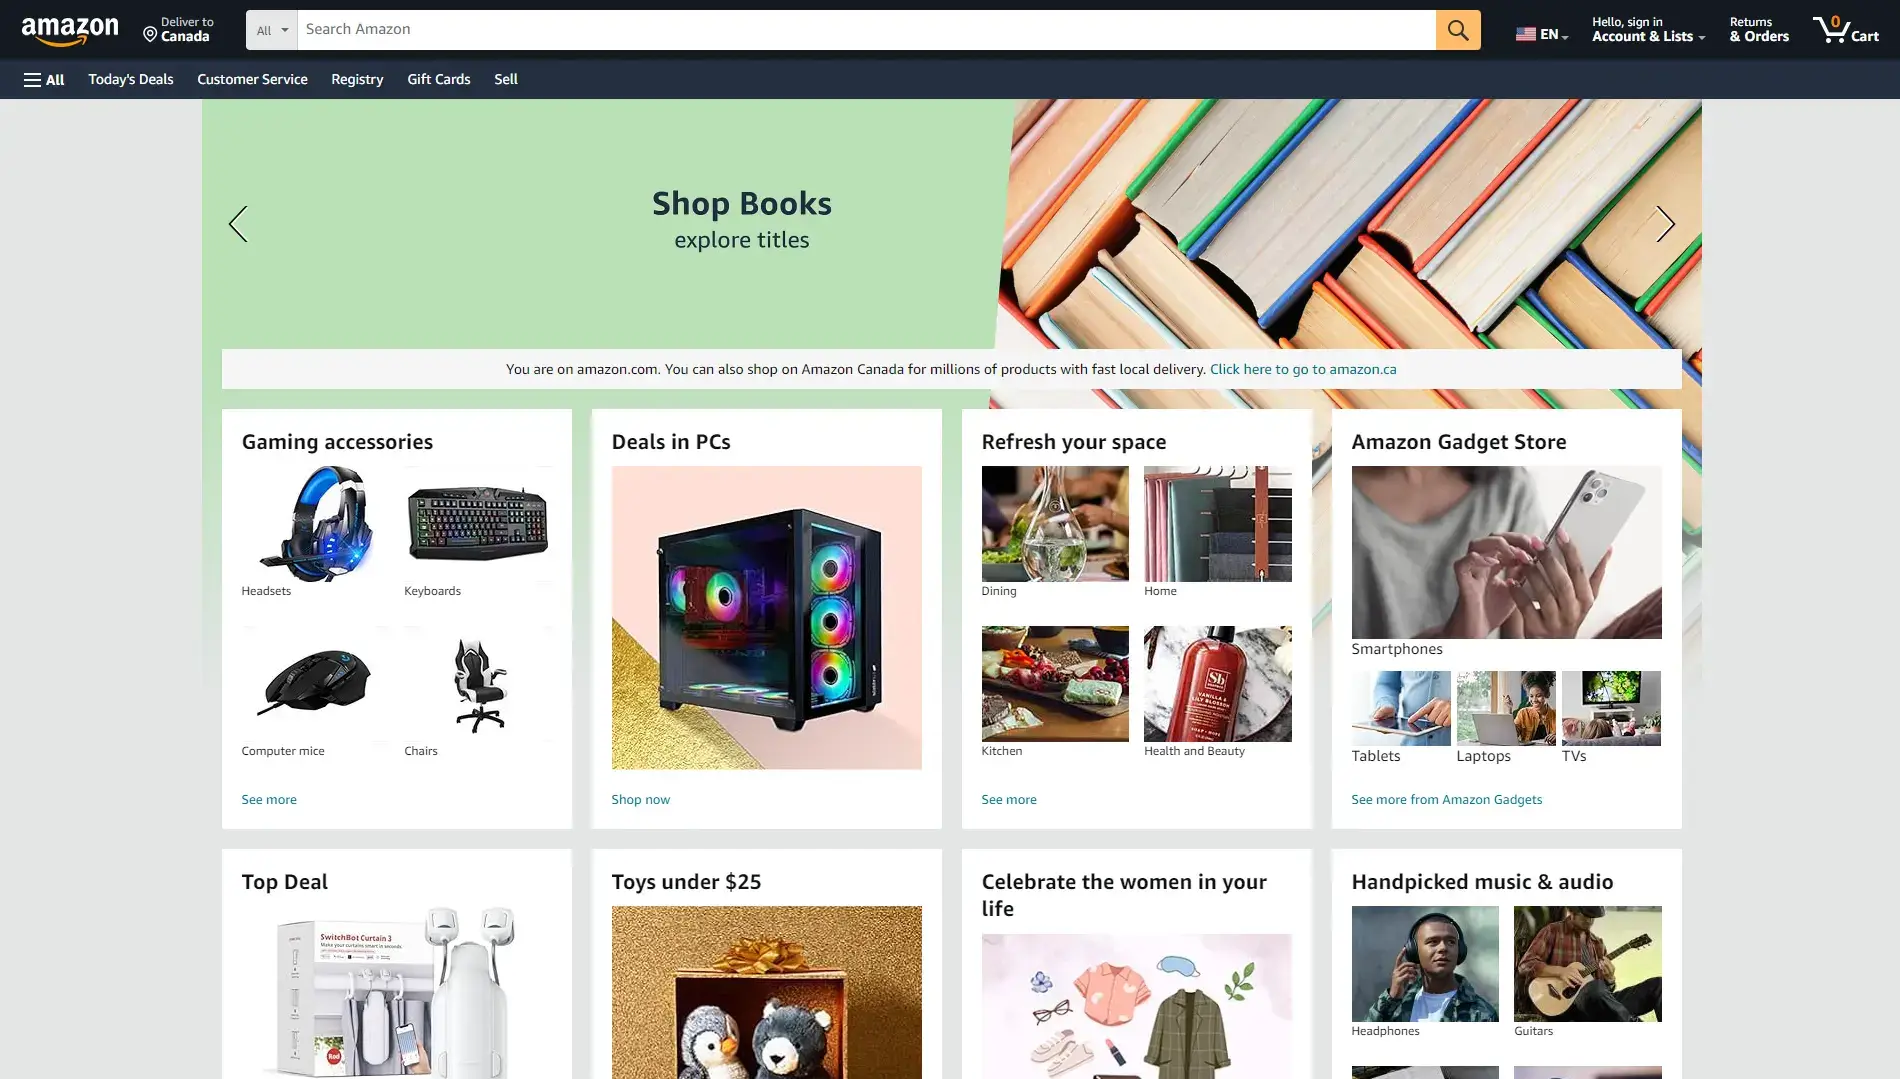 Amazon.com website homepage image.